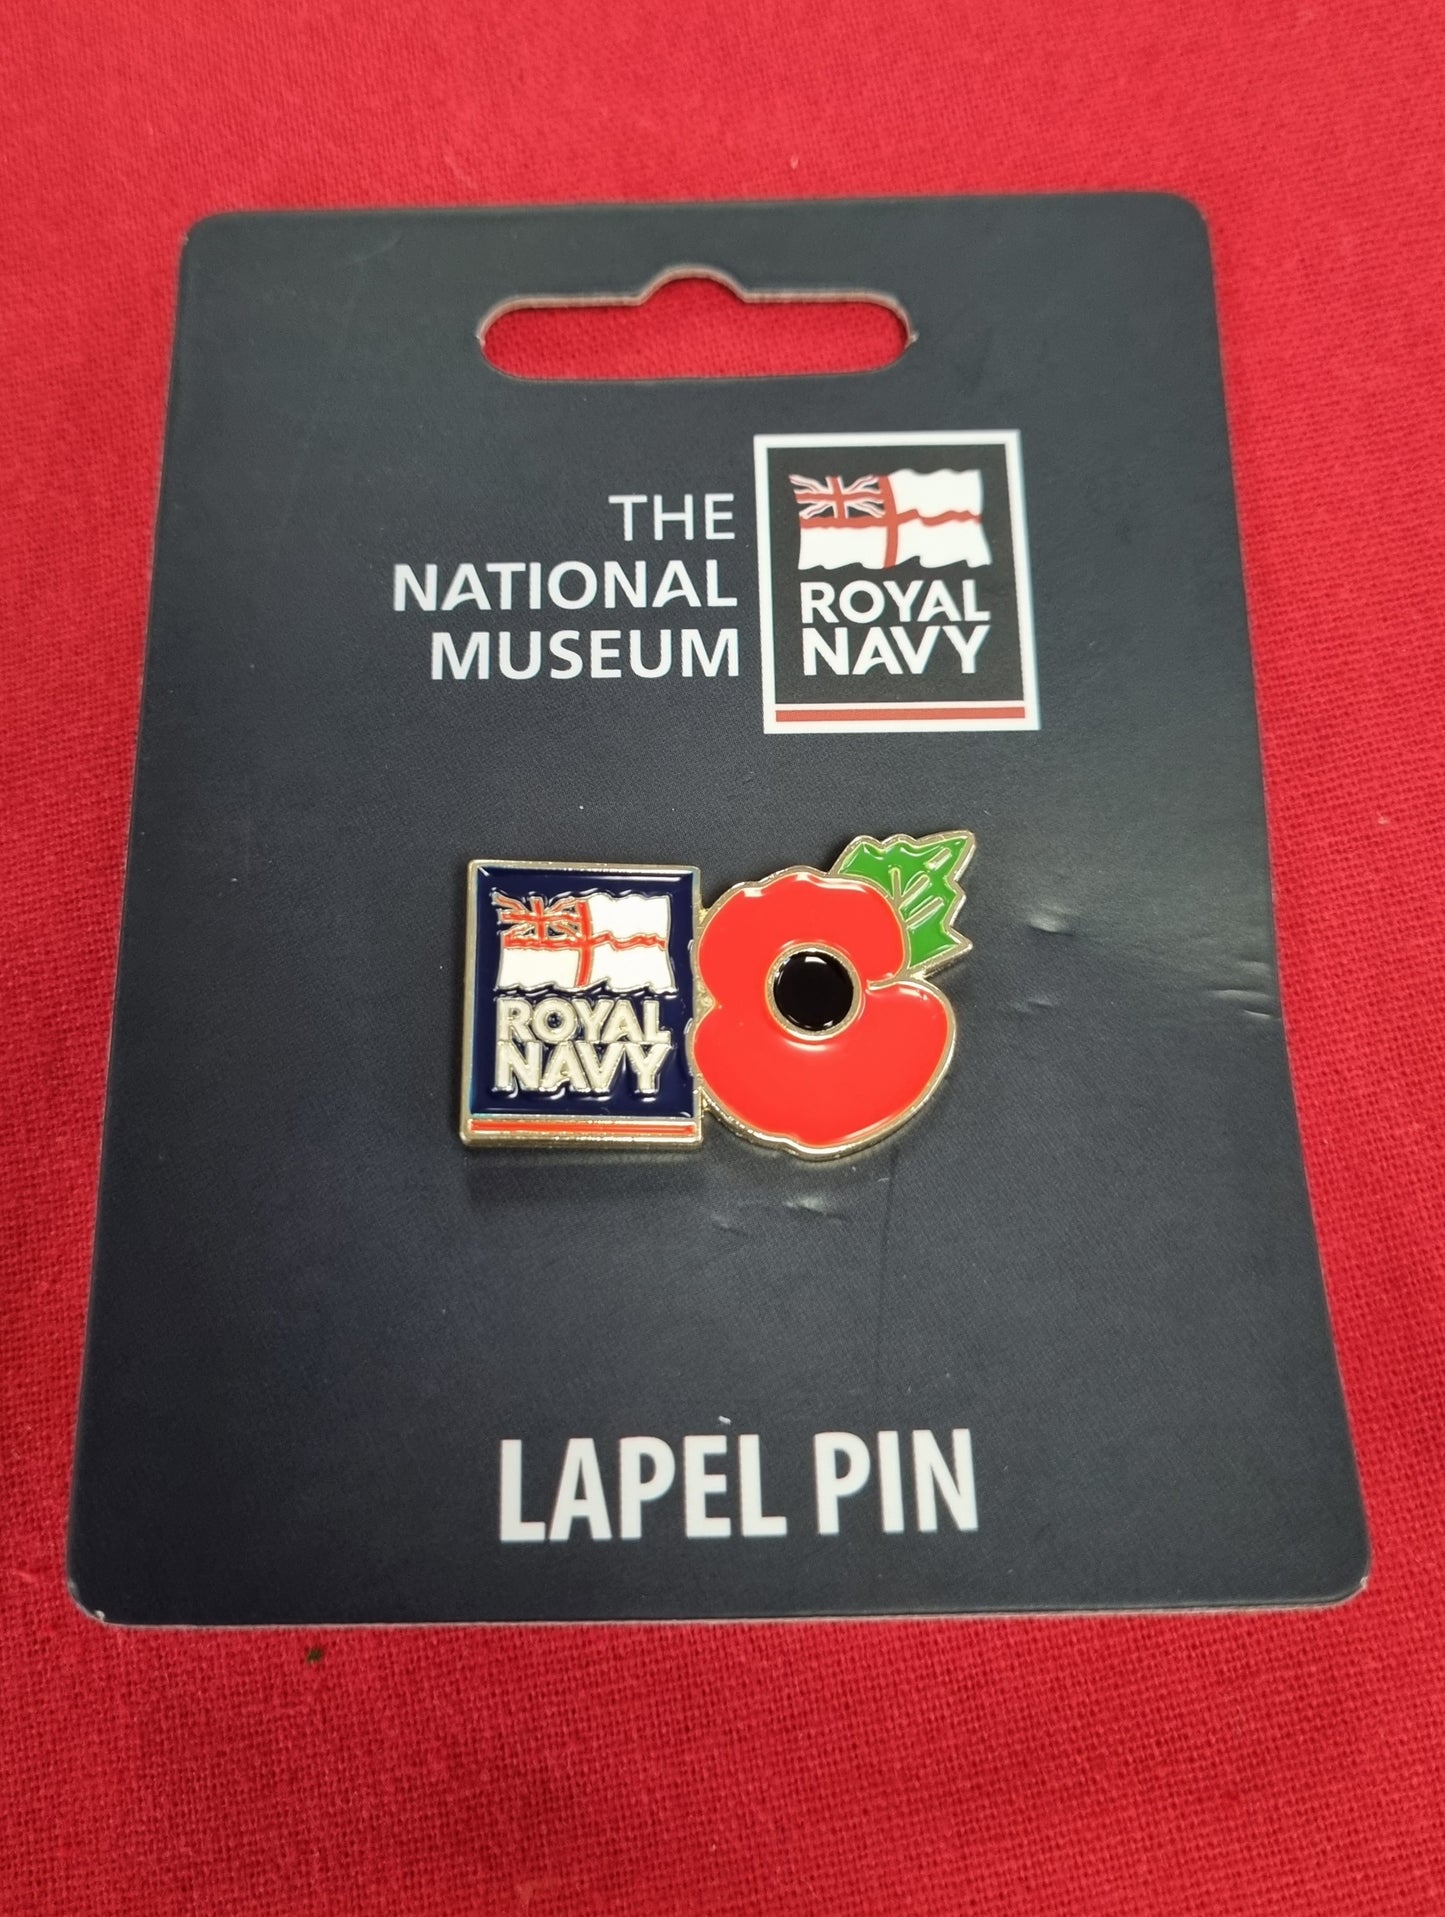 Royal Navy Poppy Pin Badge